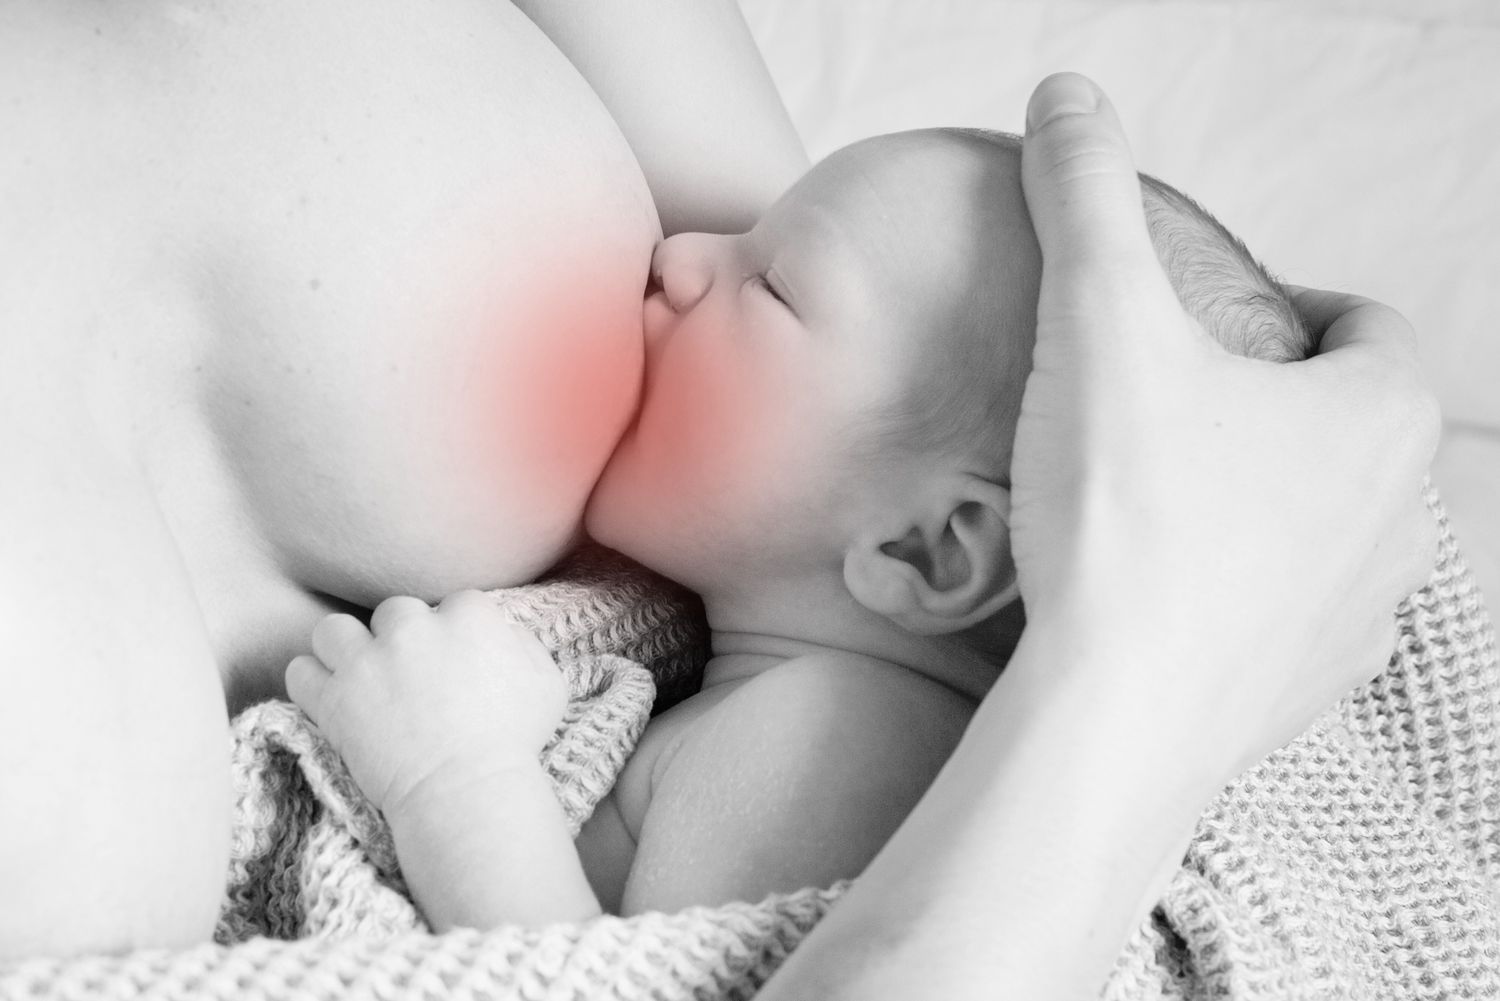 breastfeeding/thrush illustration